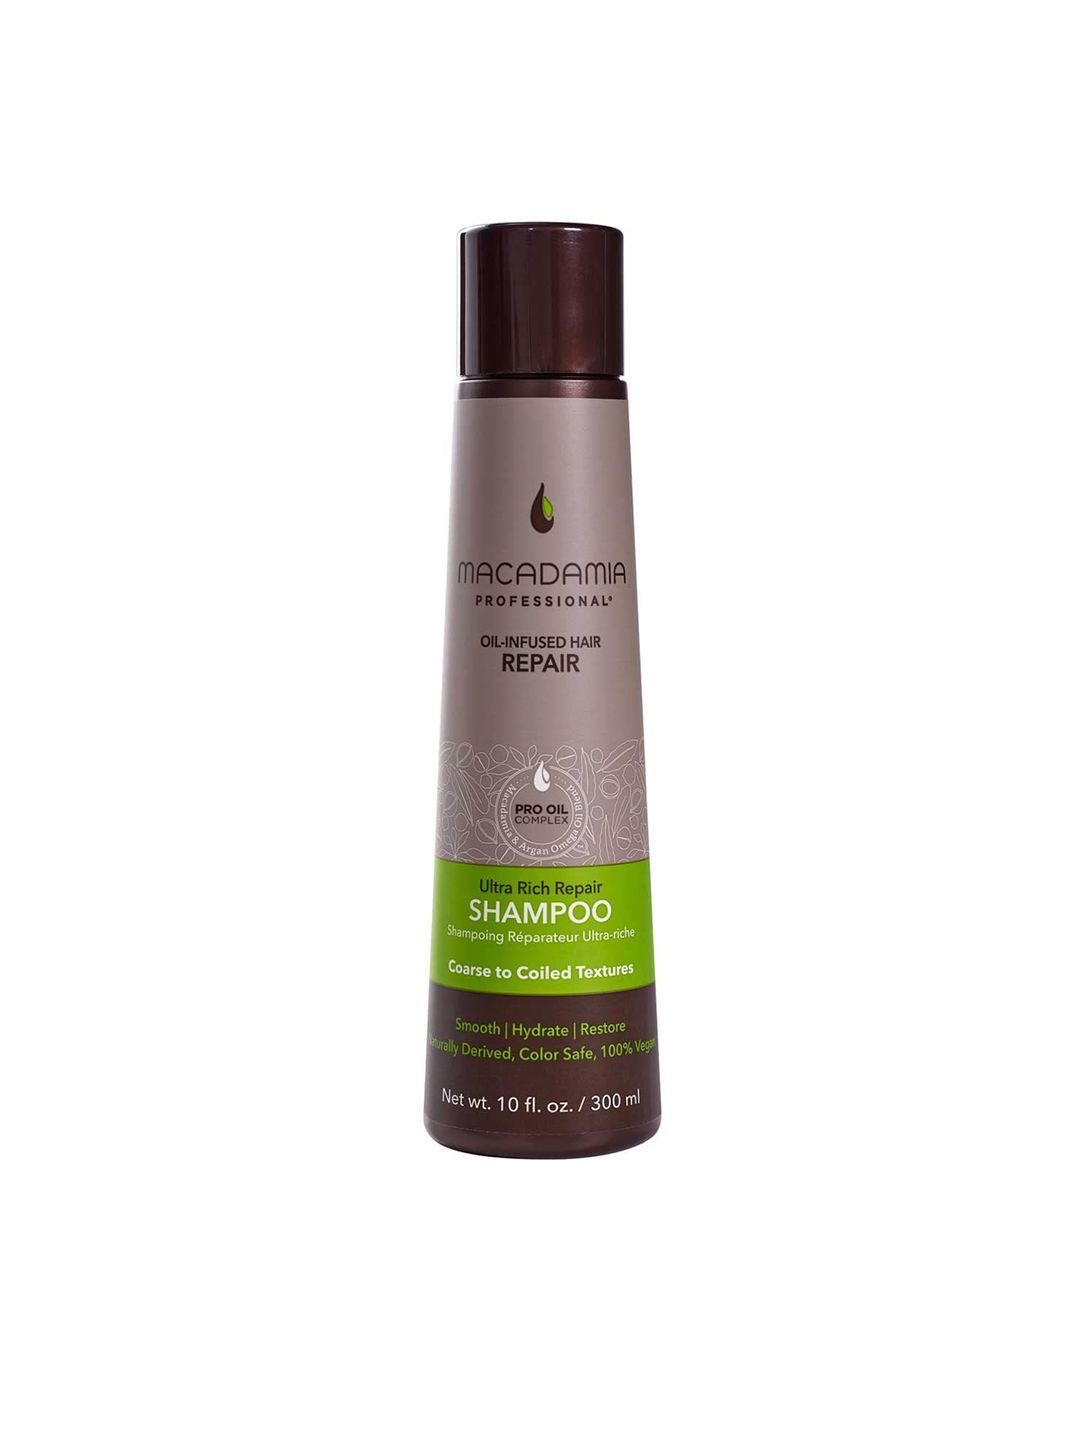 macadamia professional ultra rich repair shampoo - 300ml